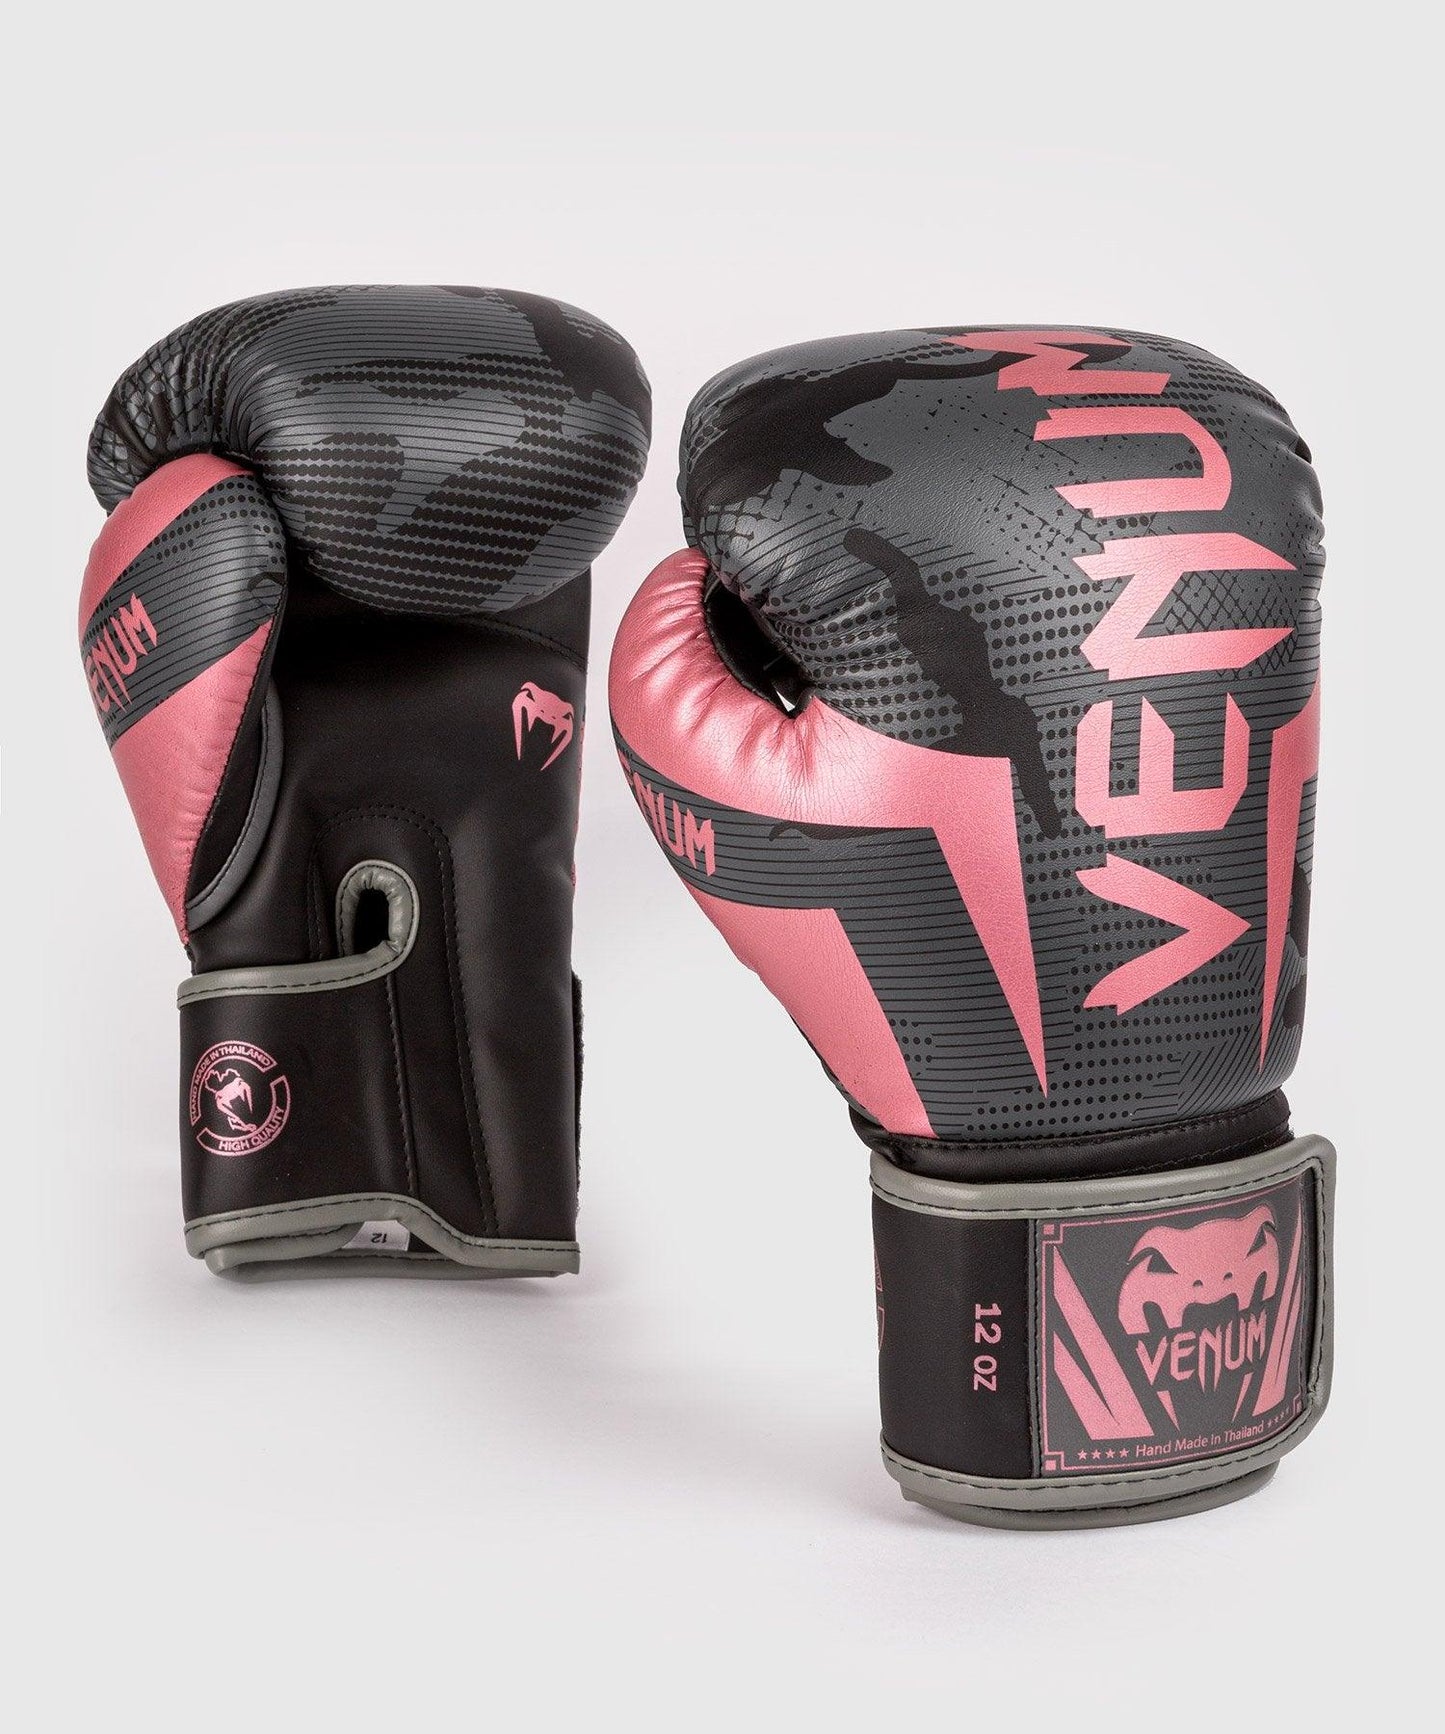 Venum Elite Boxing Gloves - Black/Pink Gold Picture 1